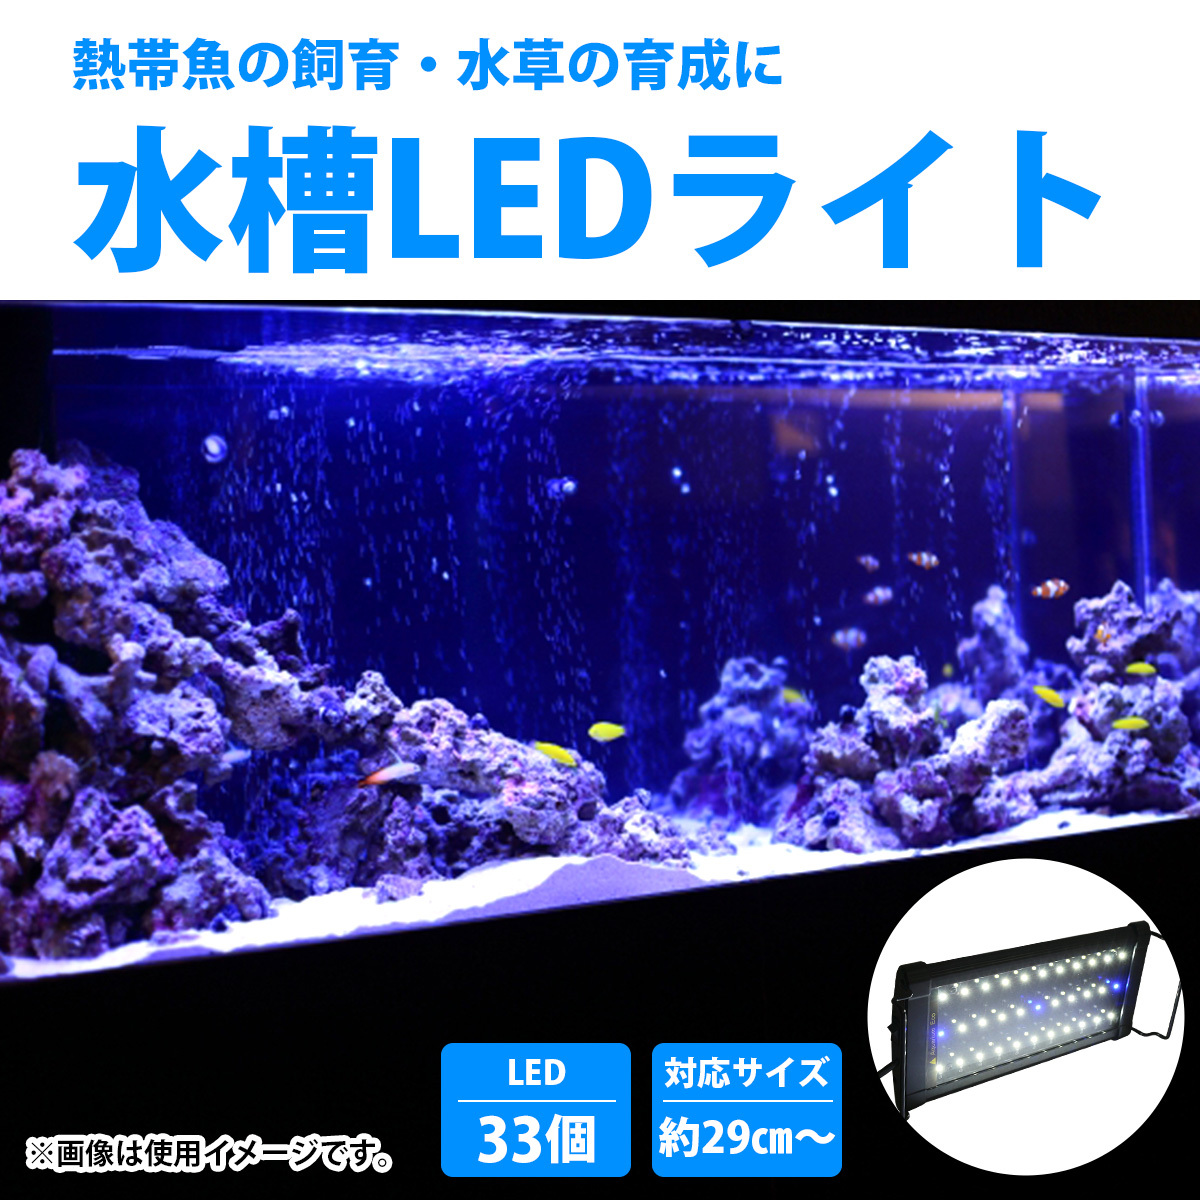 30cm-50cm 青/白 水槽 LED 照明 伸縮プレート型 薄型スリムタイプ 水槽 プレート ライト サンゴ 熱帯魚 アクアリウム ライト_画像2